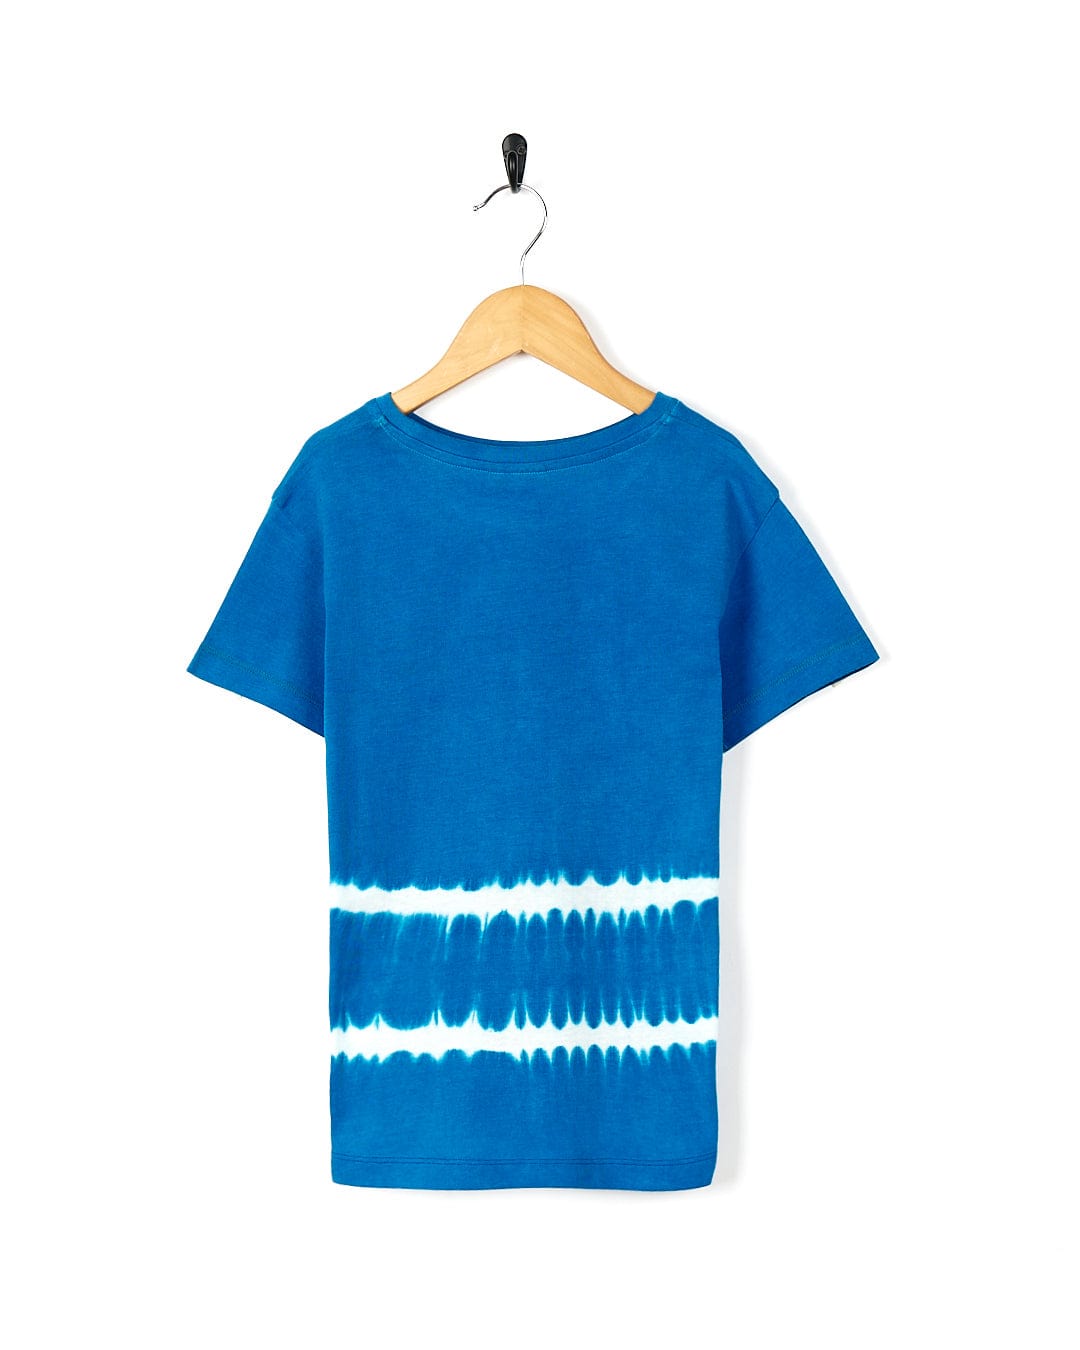 A Saltrock - Hardskate - Kids Tie Dye Short Sleeve T-Shirt - Blue hanging on a wooden hanger.